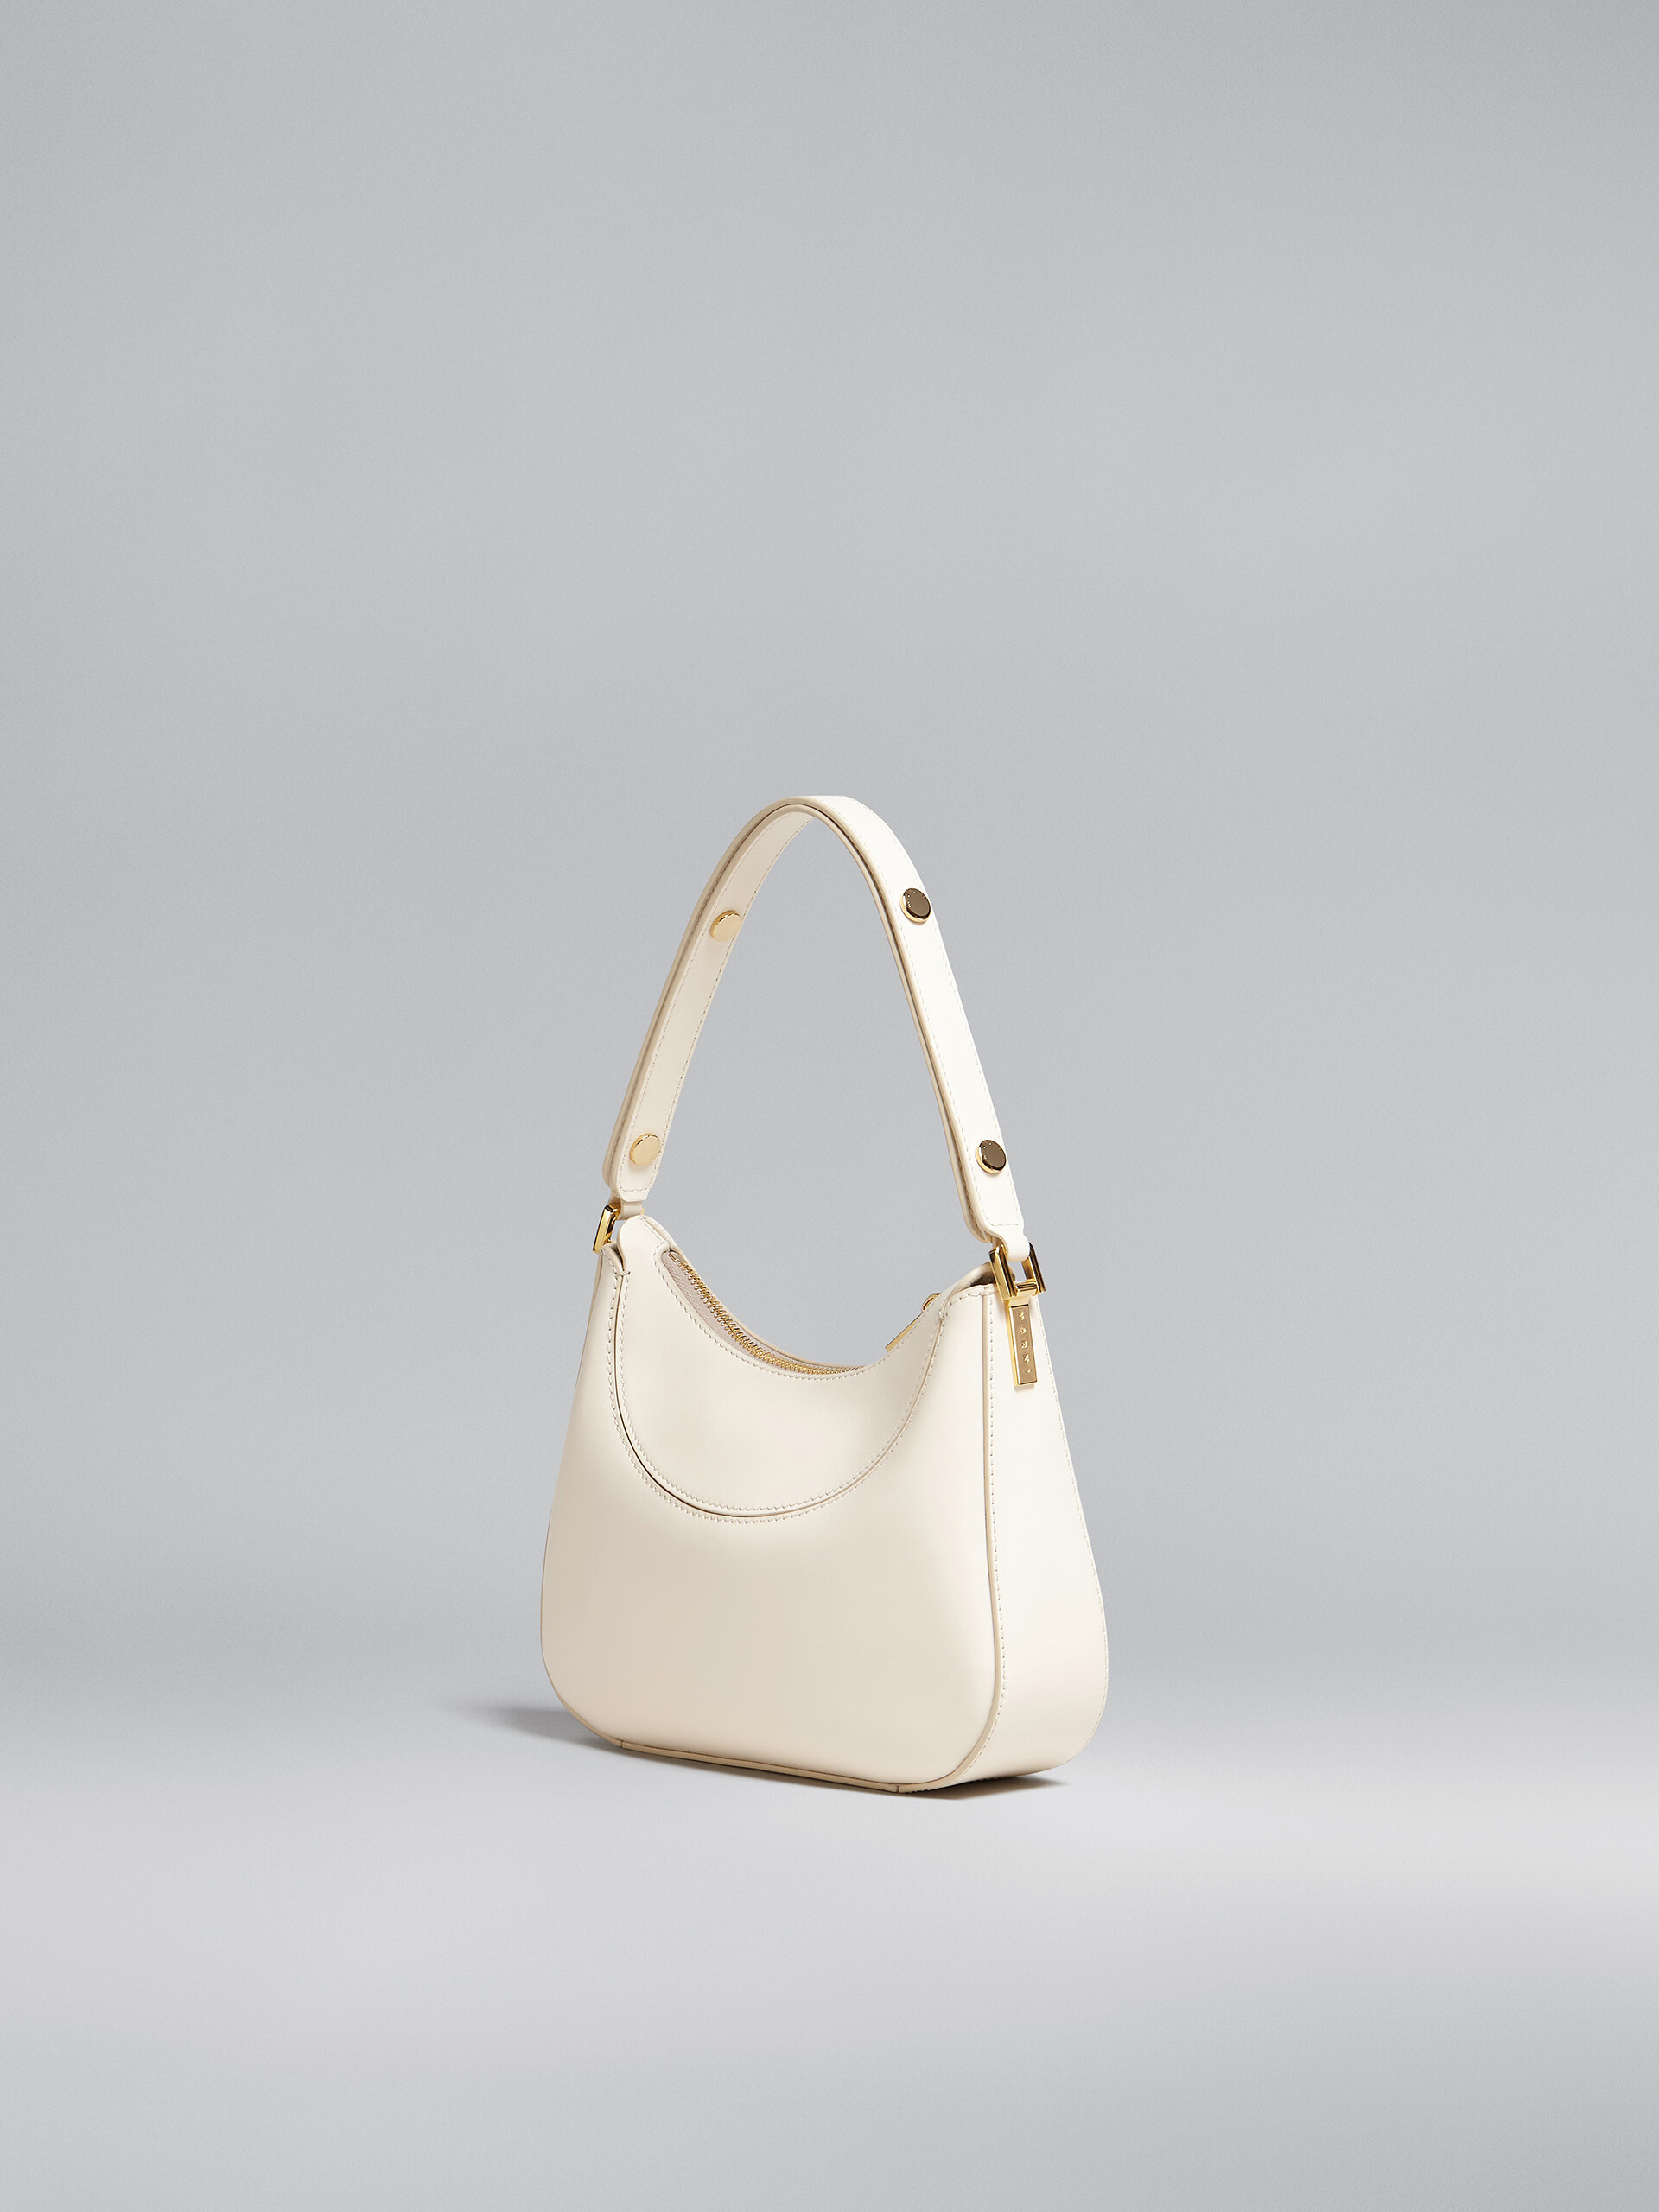 Milano mini bag in white leather - Handbags - Image 3